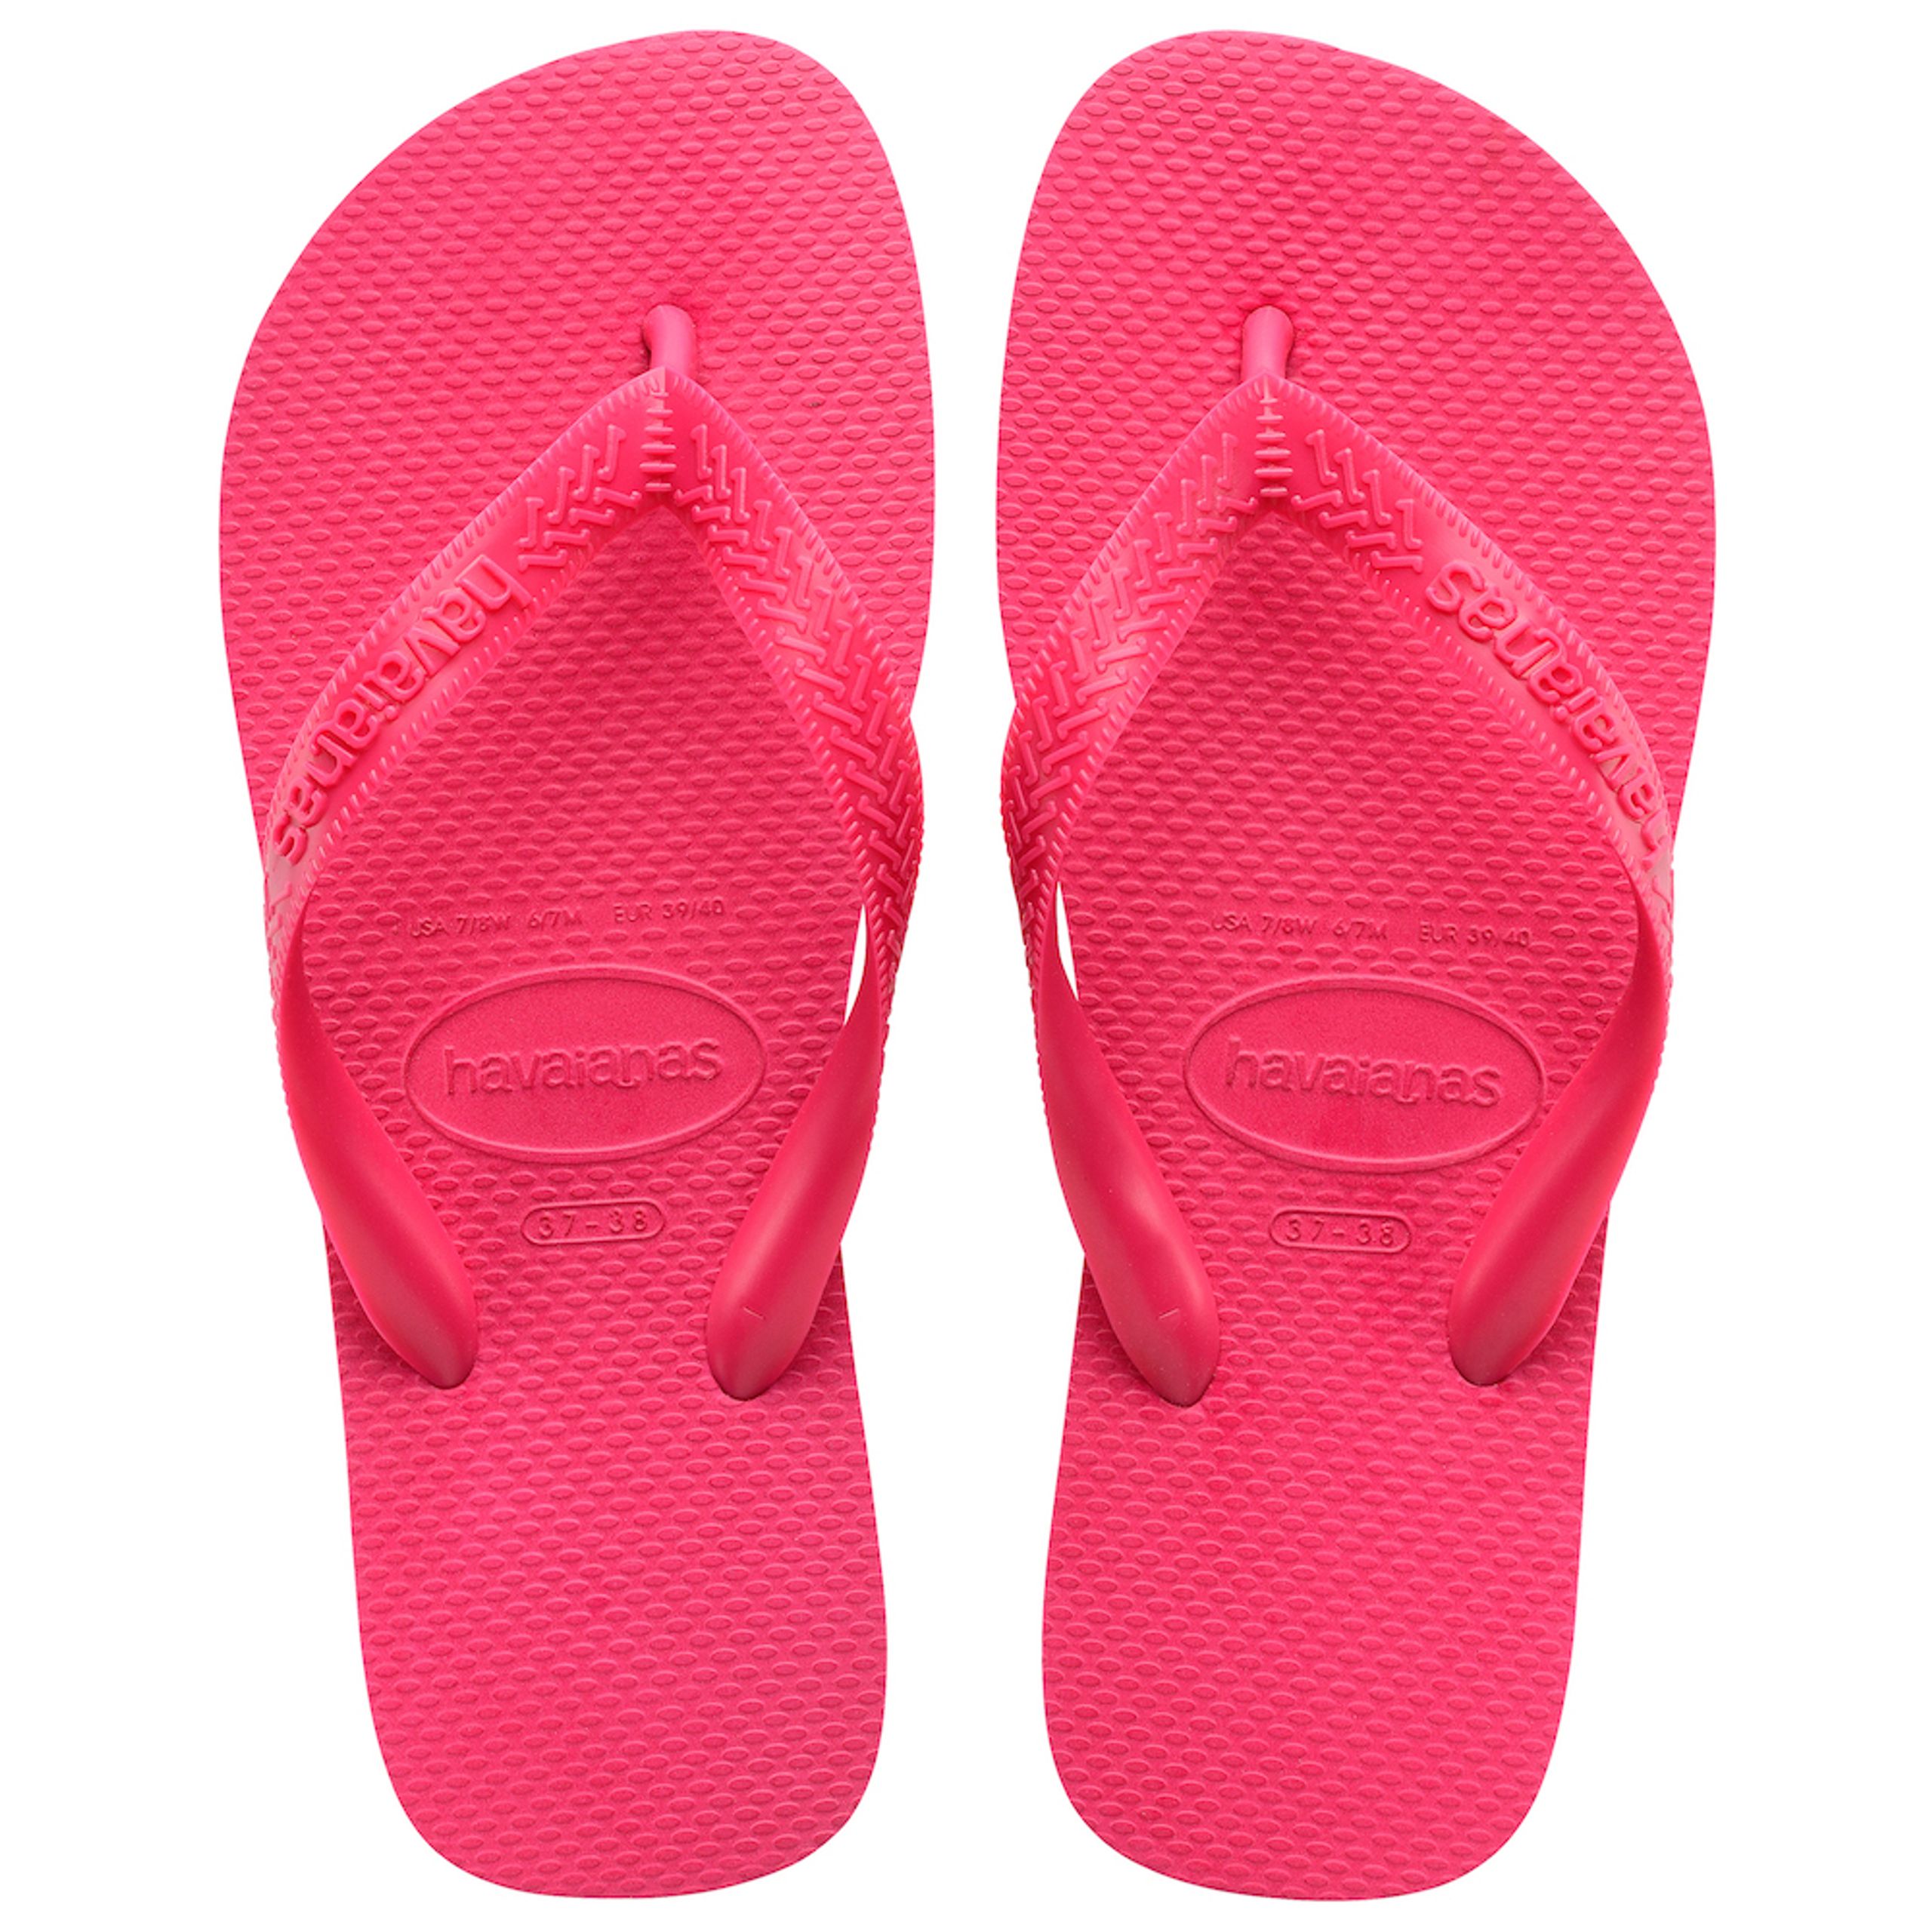 Havaianas sandaler - pink TOP - DAME - zjoos